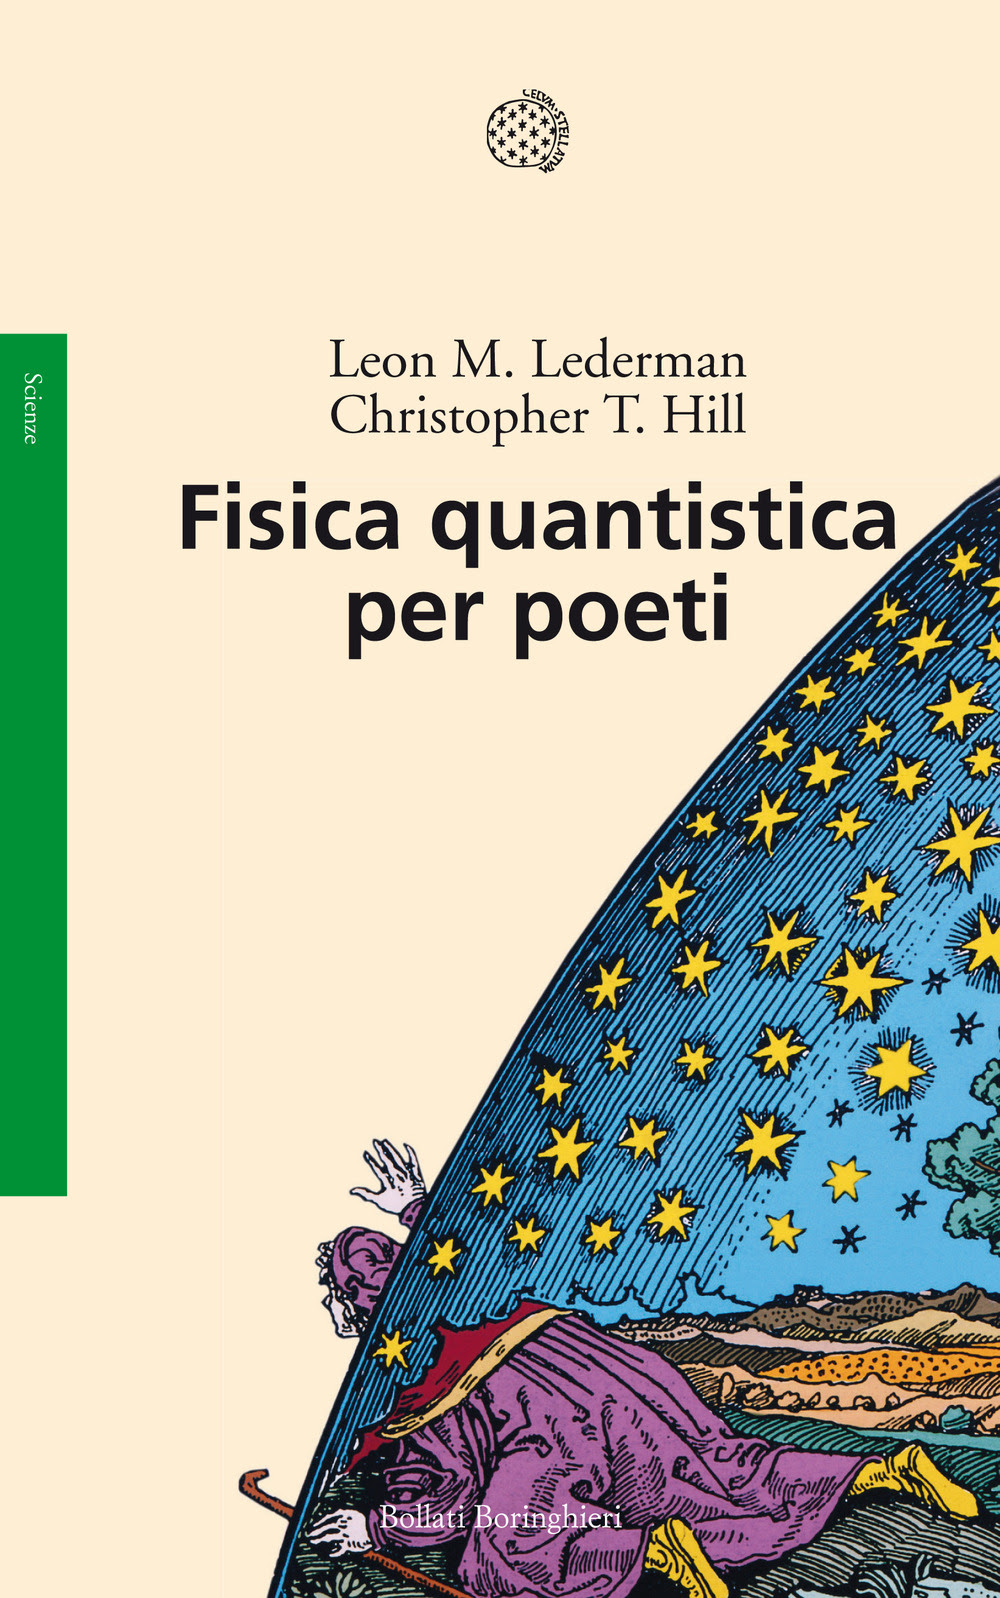 Fisica quantistica per poeti in Kindle/PDF/EPUB